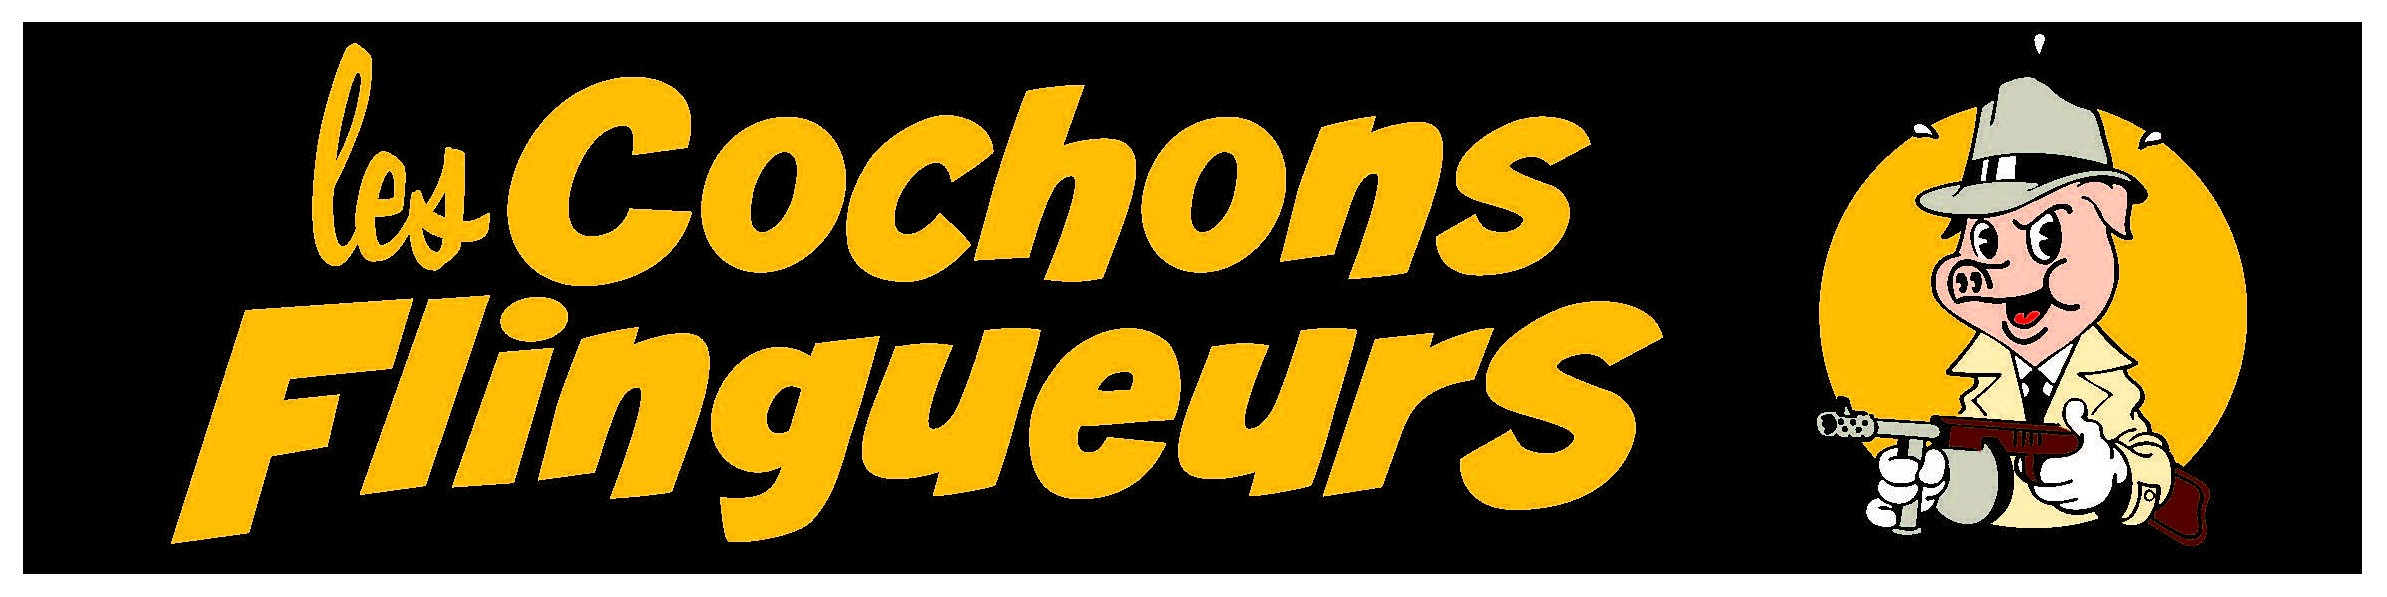 logo cochons flingueurs MC